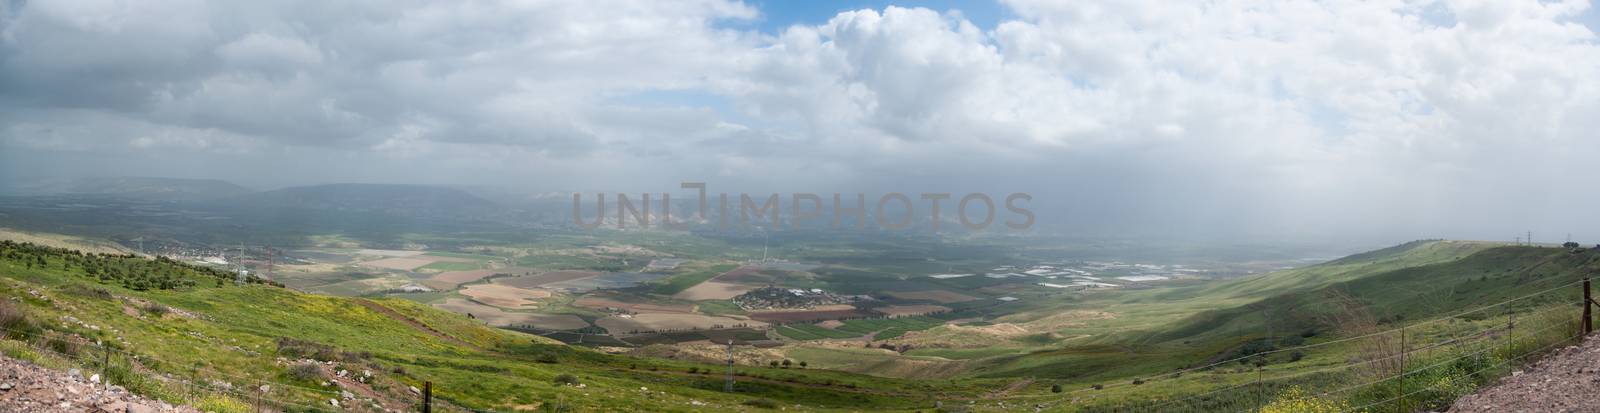 High resolution panorama of Galilee by javax